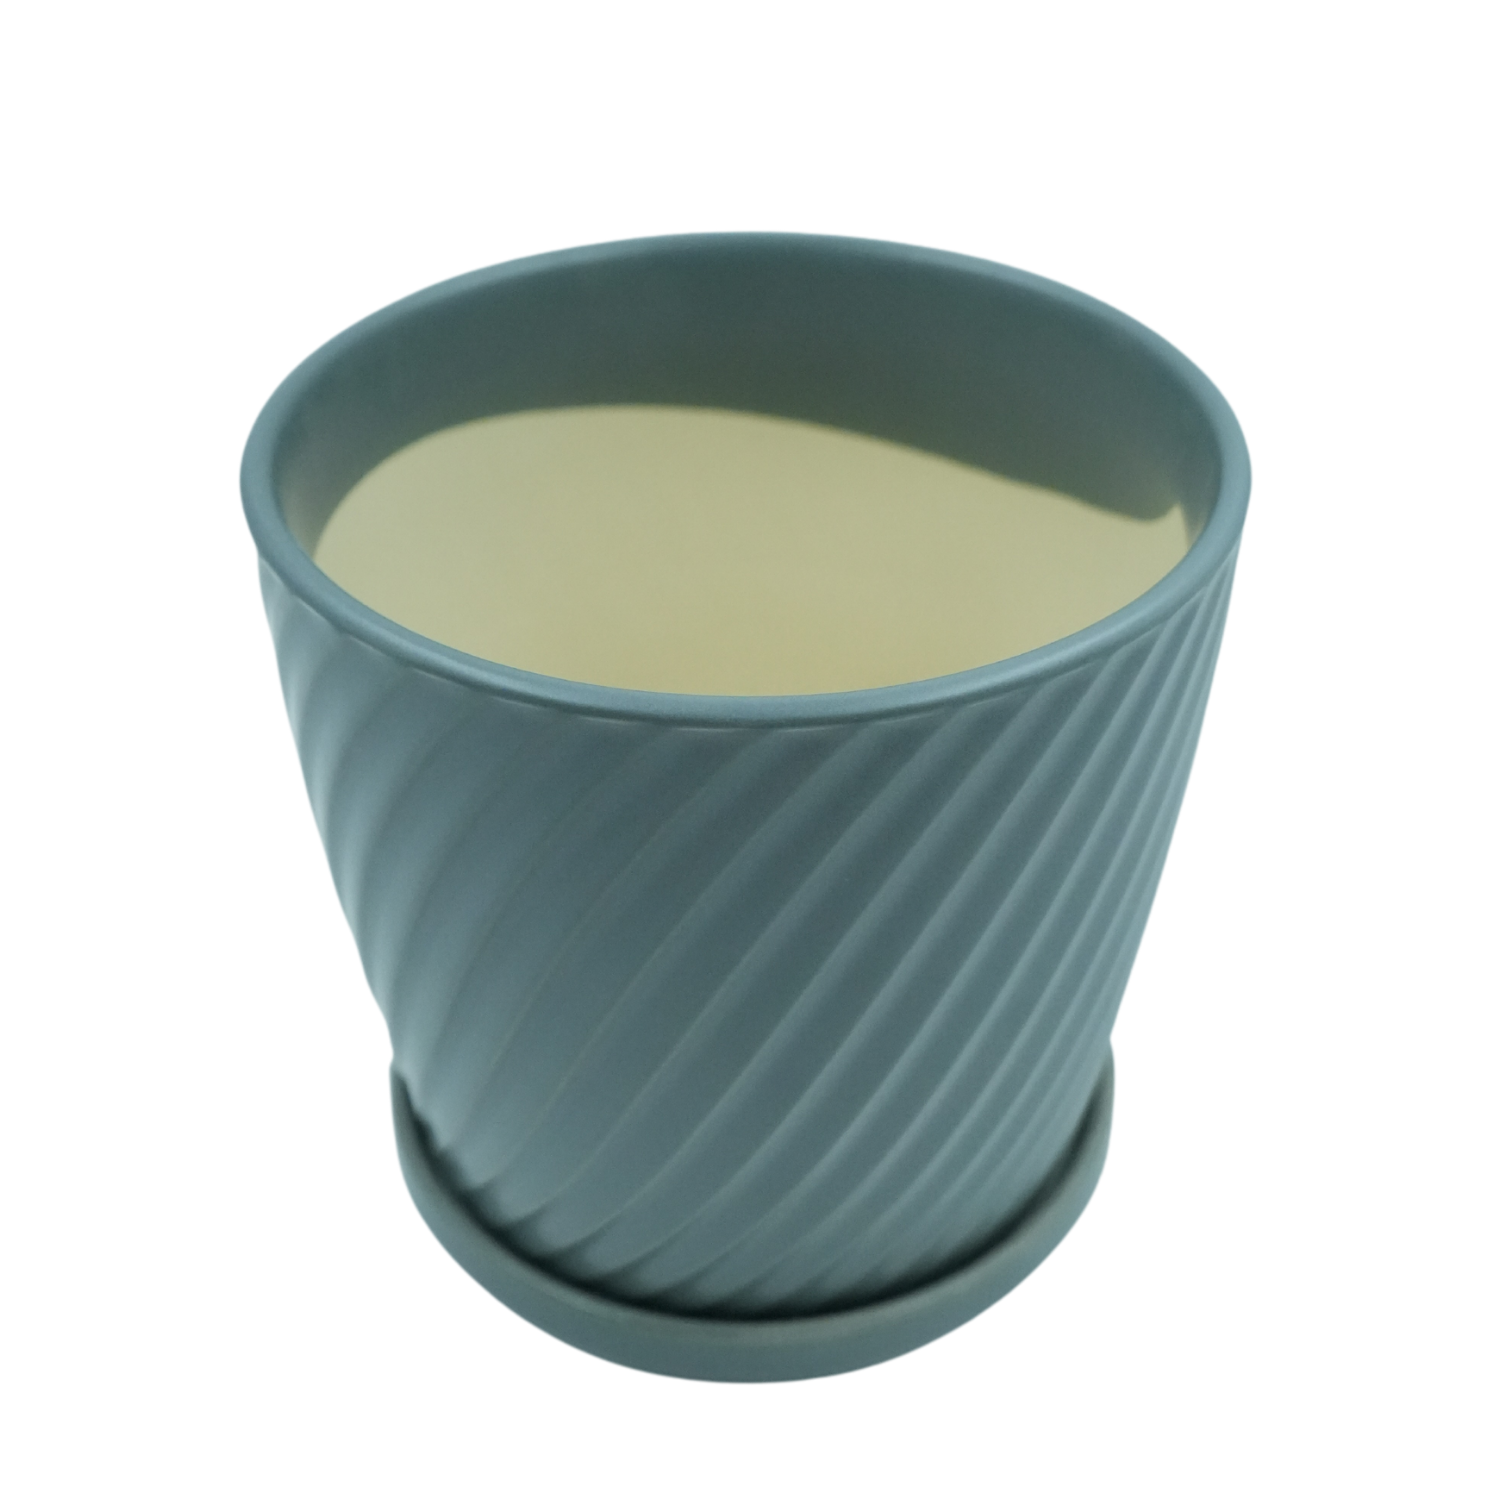 Designer Ceramic Pot (Grey, Glossy Finish,Small) for Home & Indoor Plant Decor